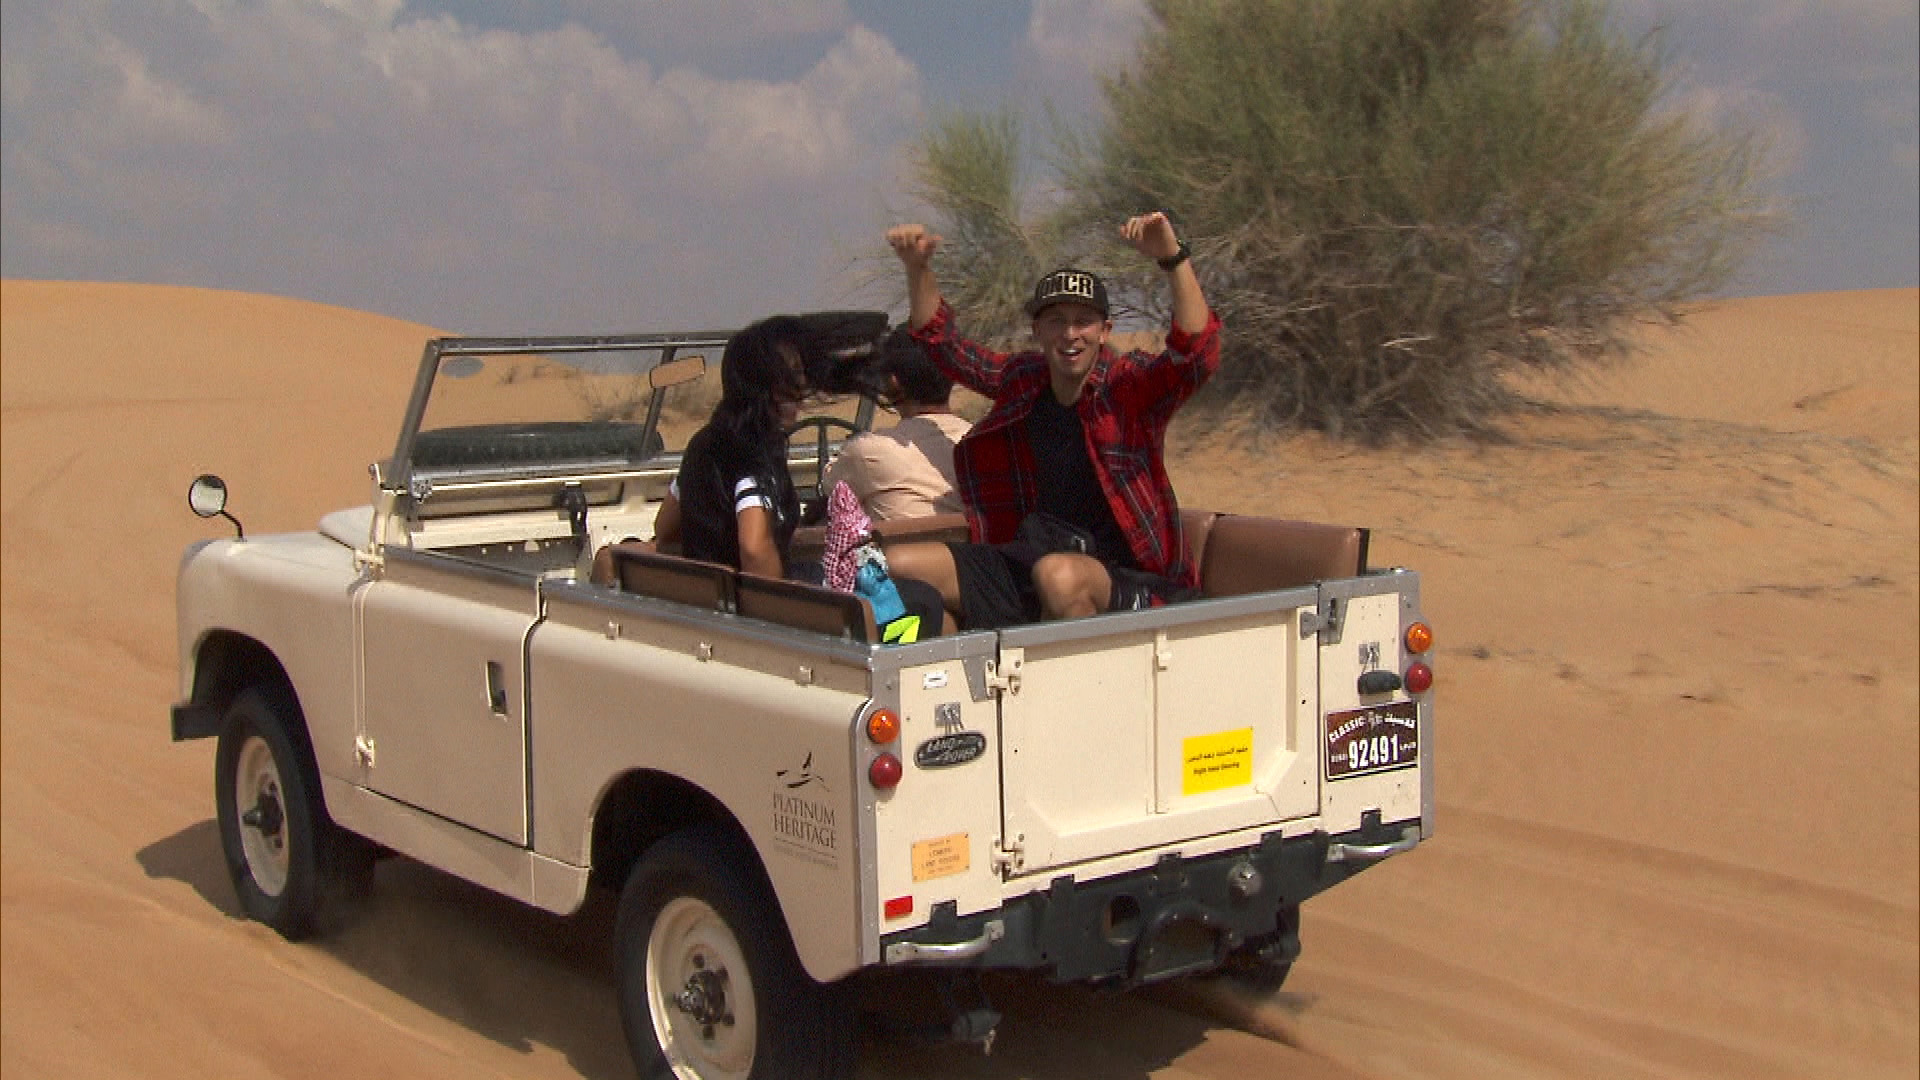 Matt and Dana take a ride in the desert toward Detour A.